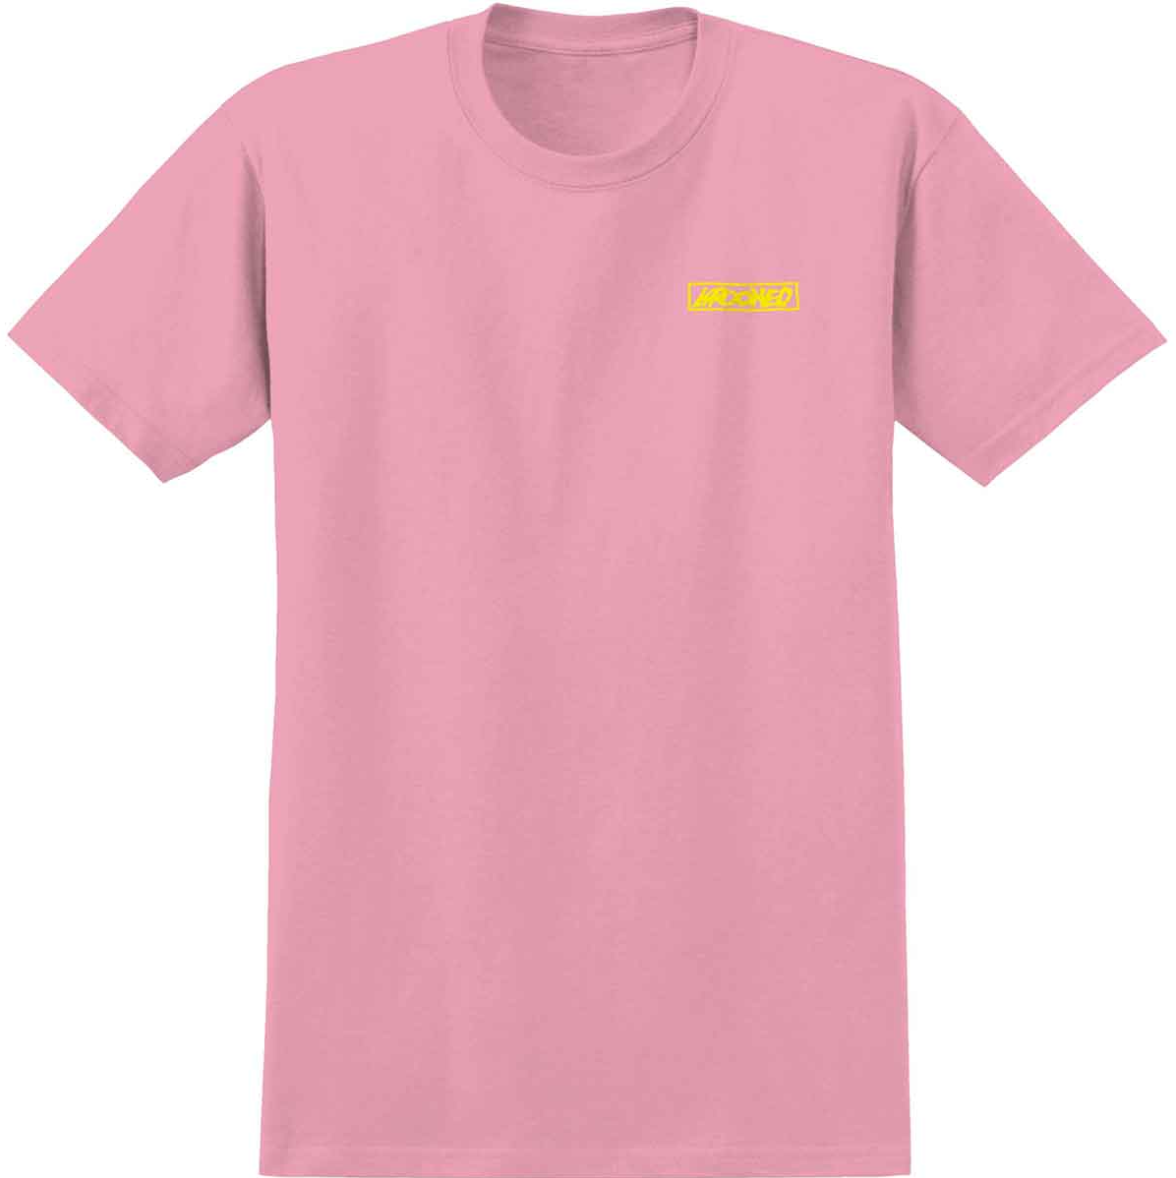 Krooked Moonsmile Short Sleeve T-Shirt (Light Pink/Yellow)